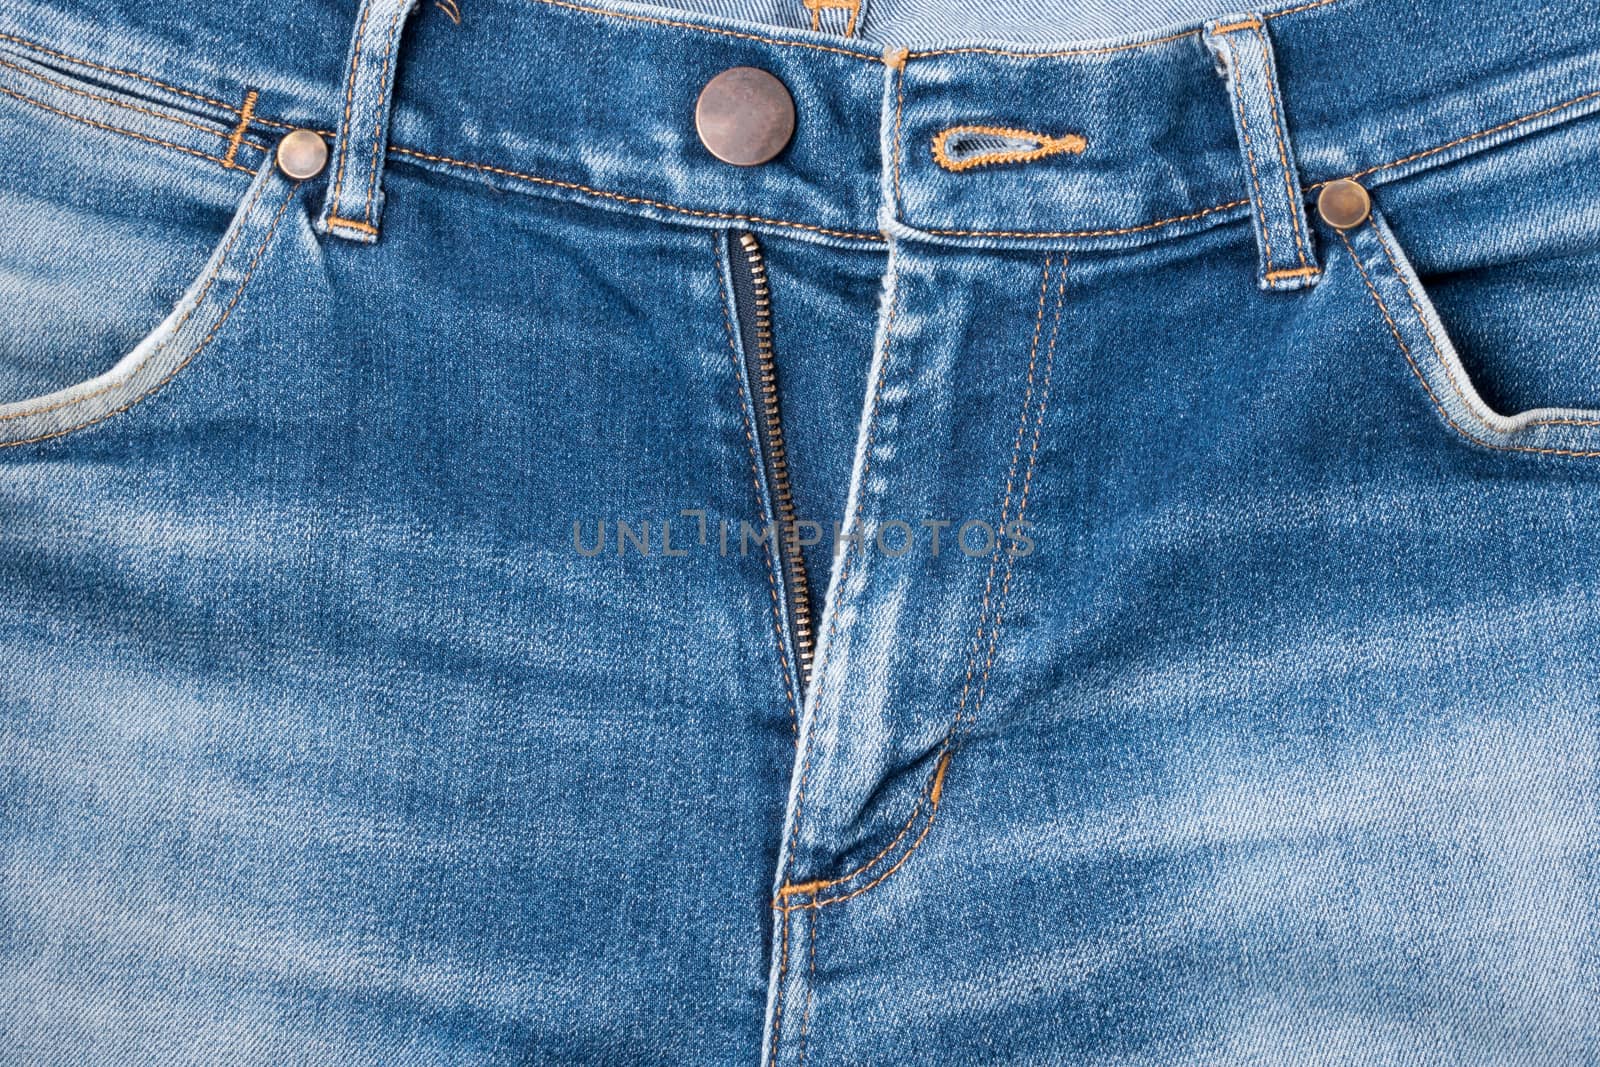 Close up of blue jeans pants, denim jeans background.